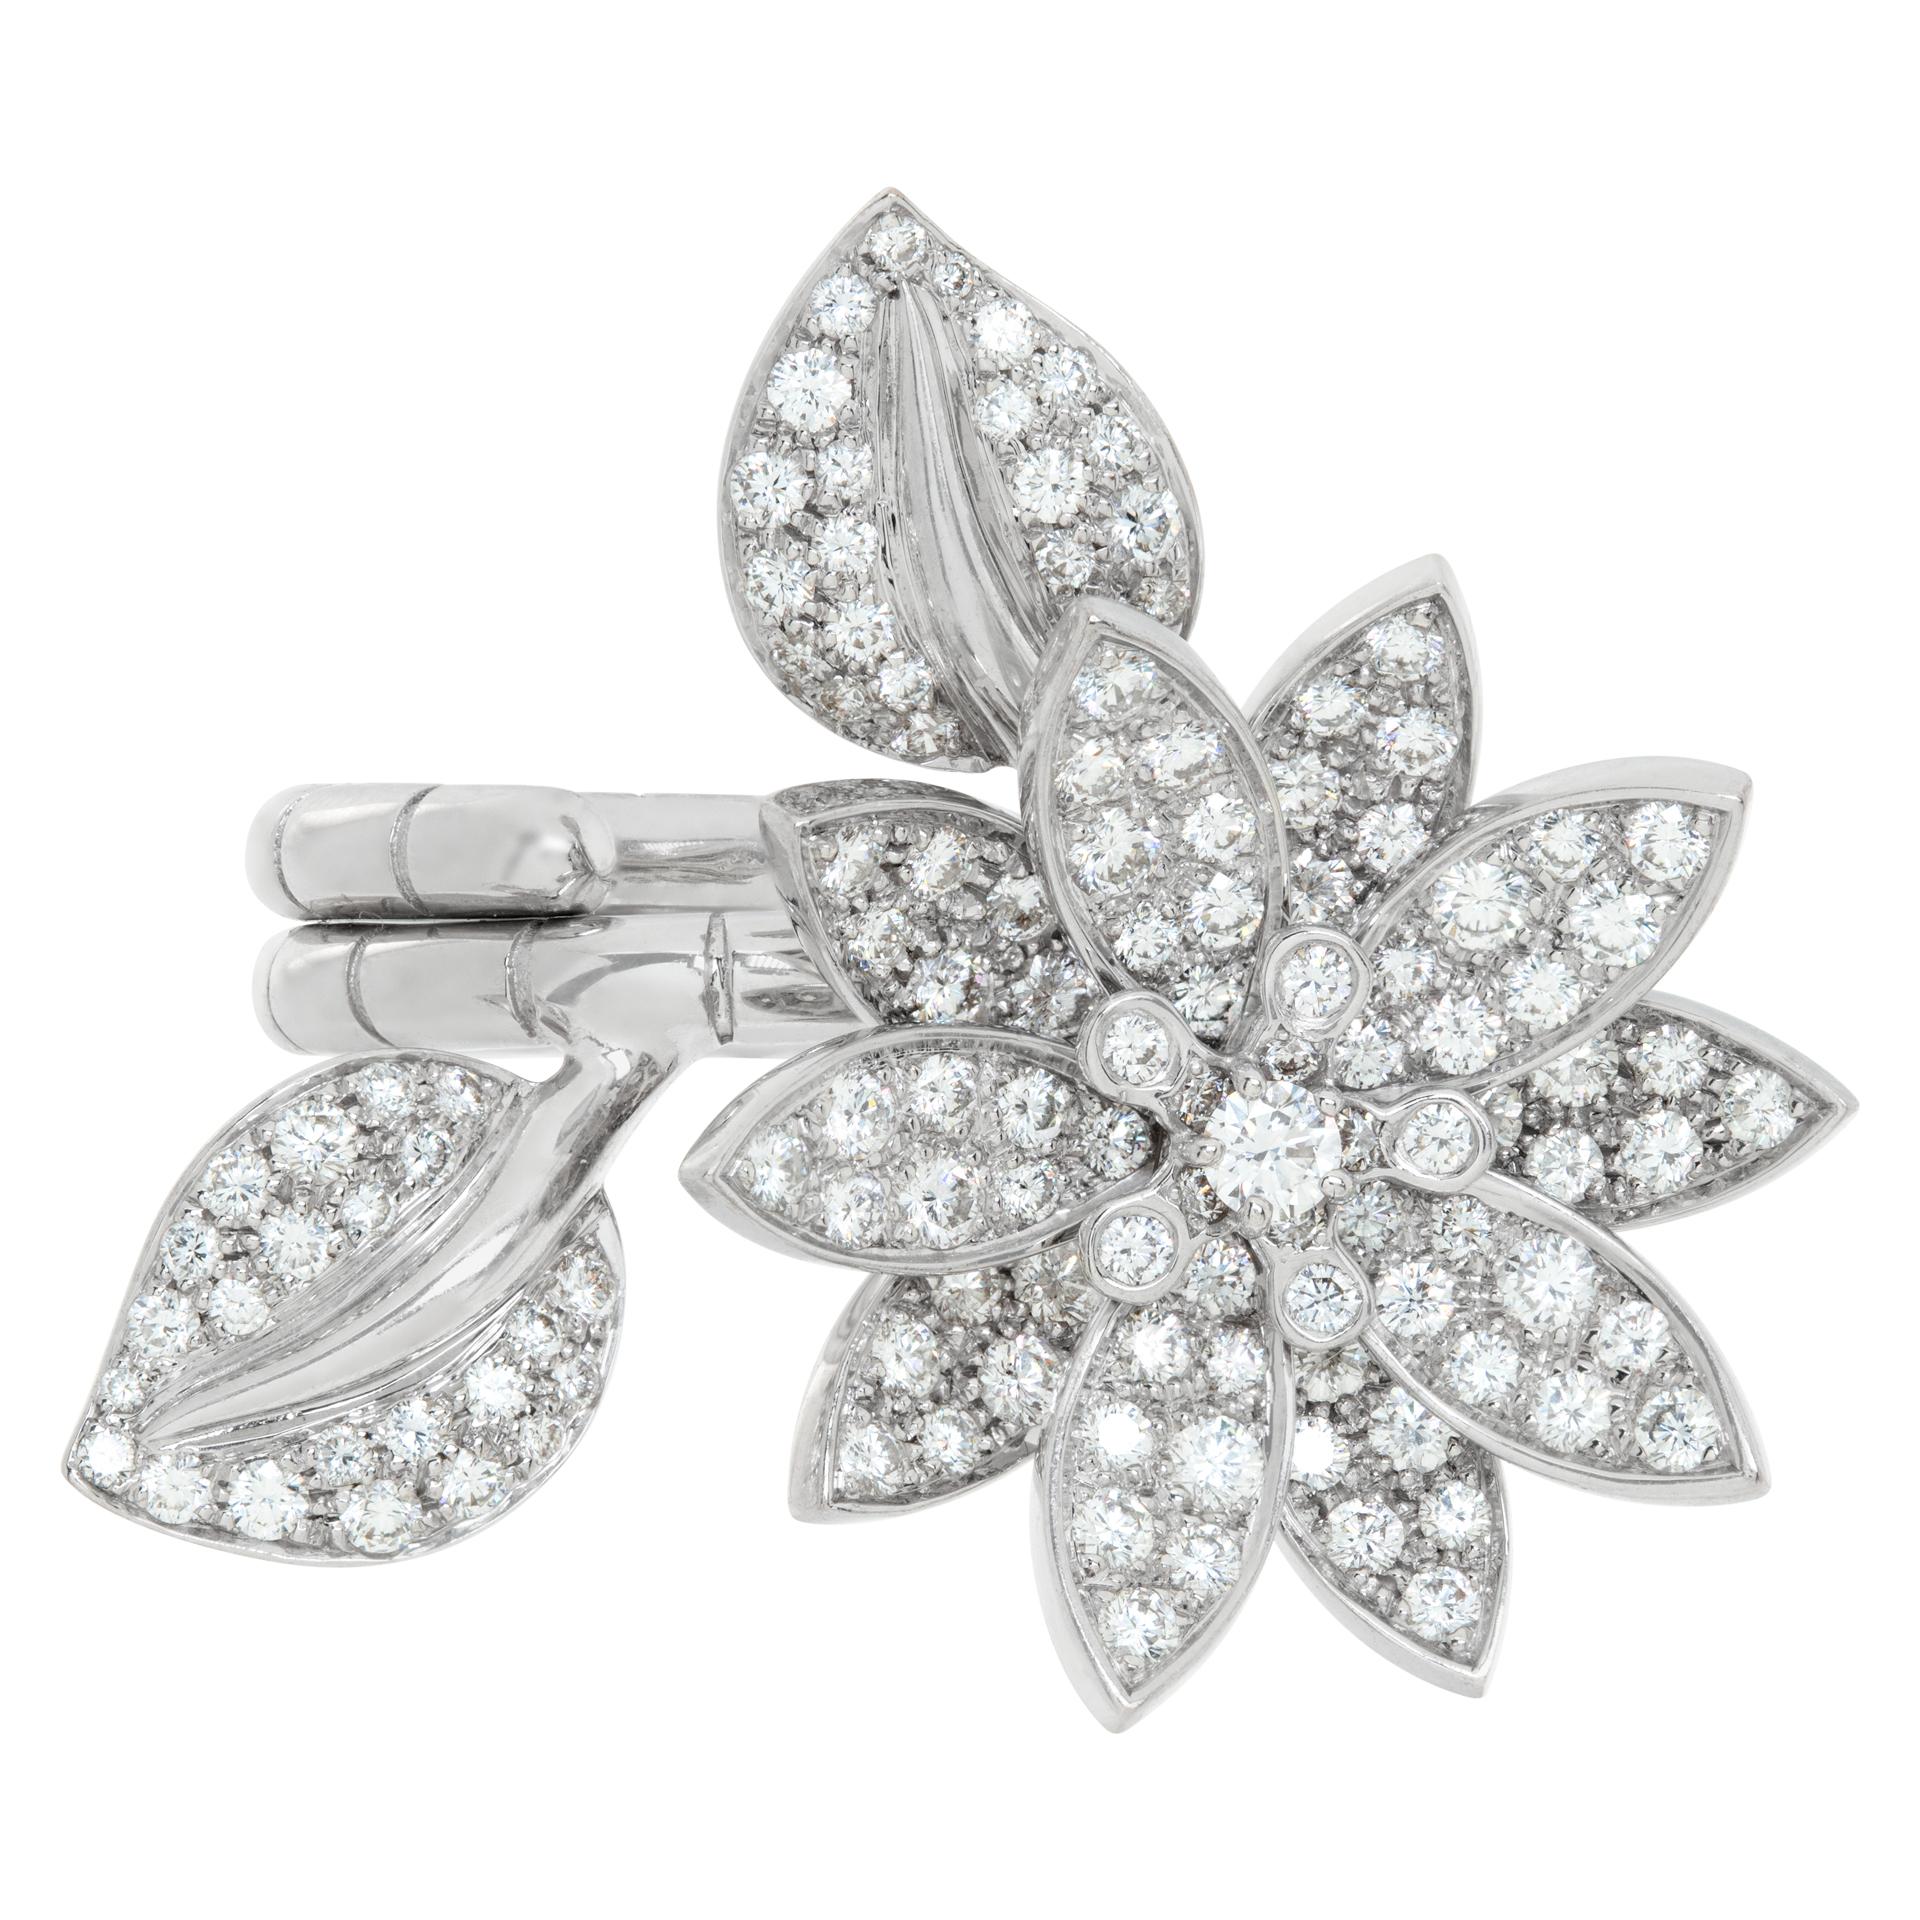 Women's Van Cleef & Arpels Lotus Ring in 18k White Gold with Diamonds